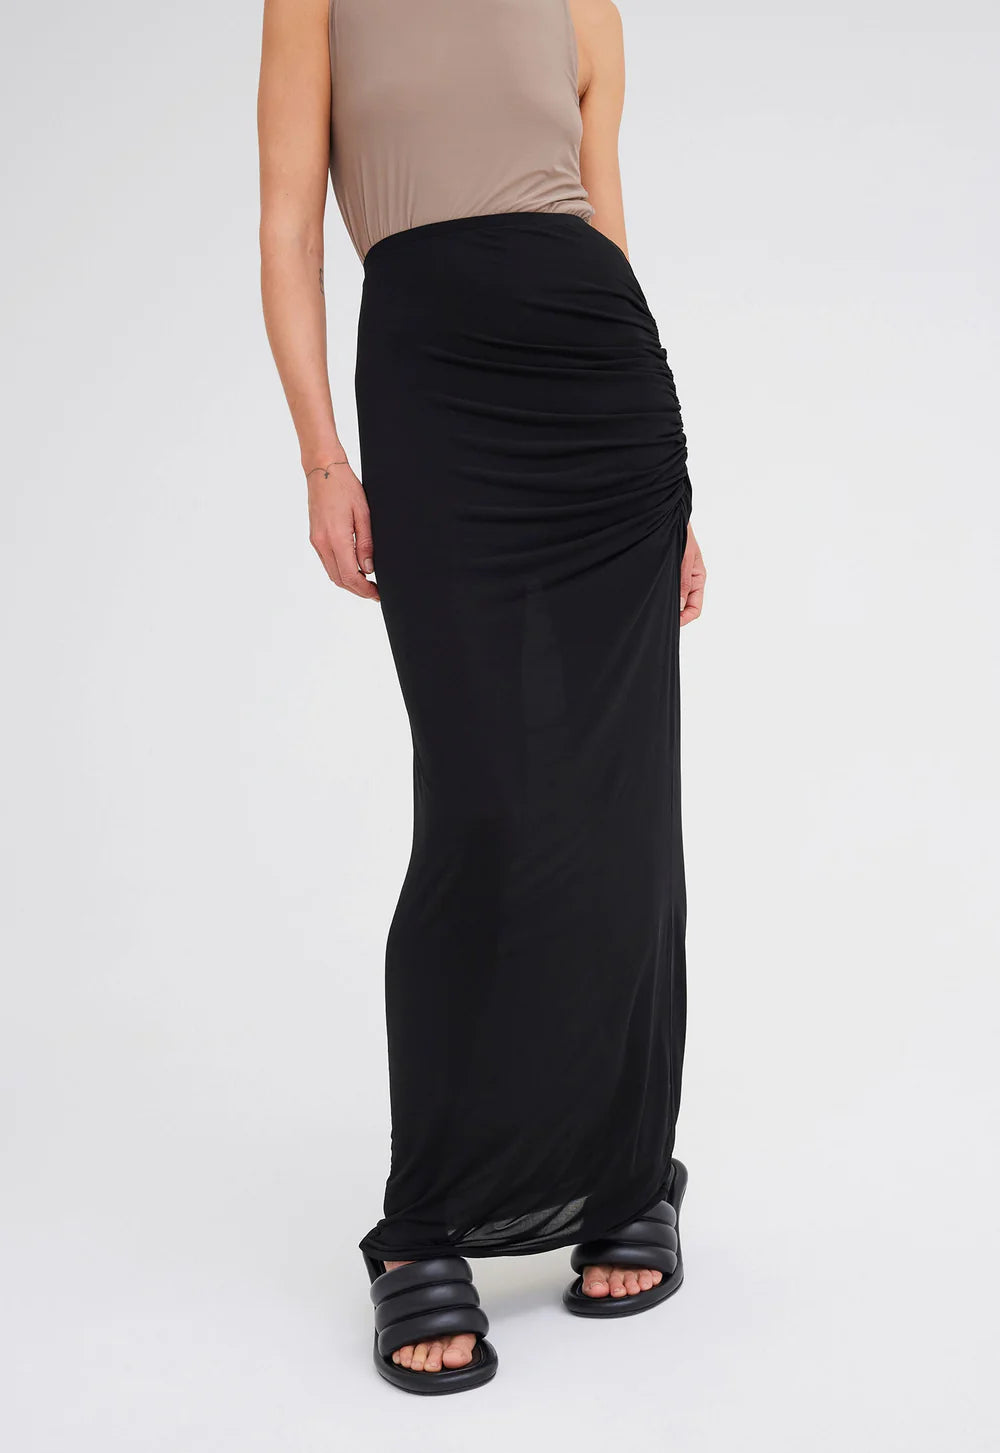 Slink Italian Jersey Skirt in Black